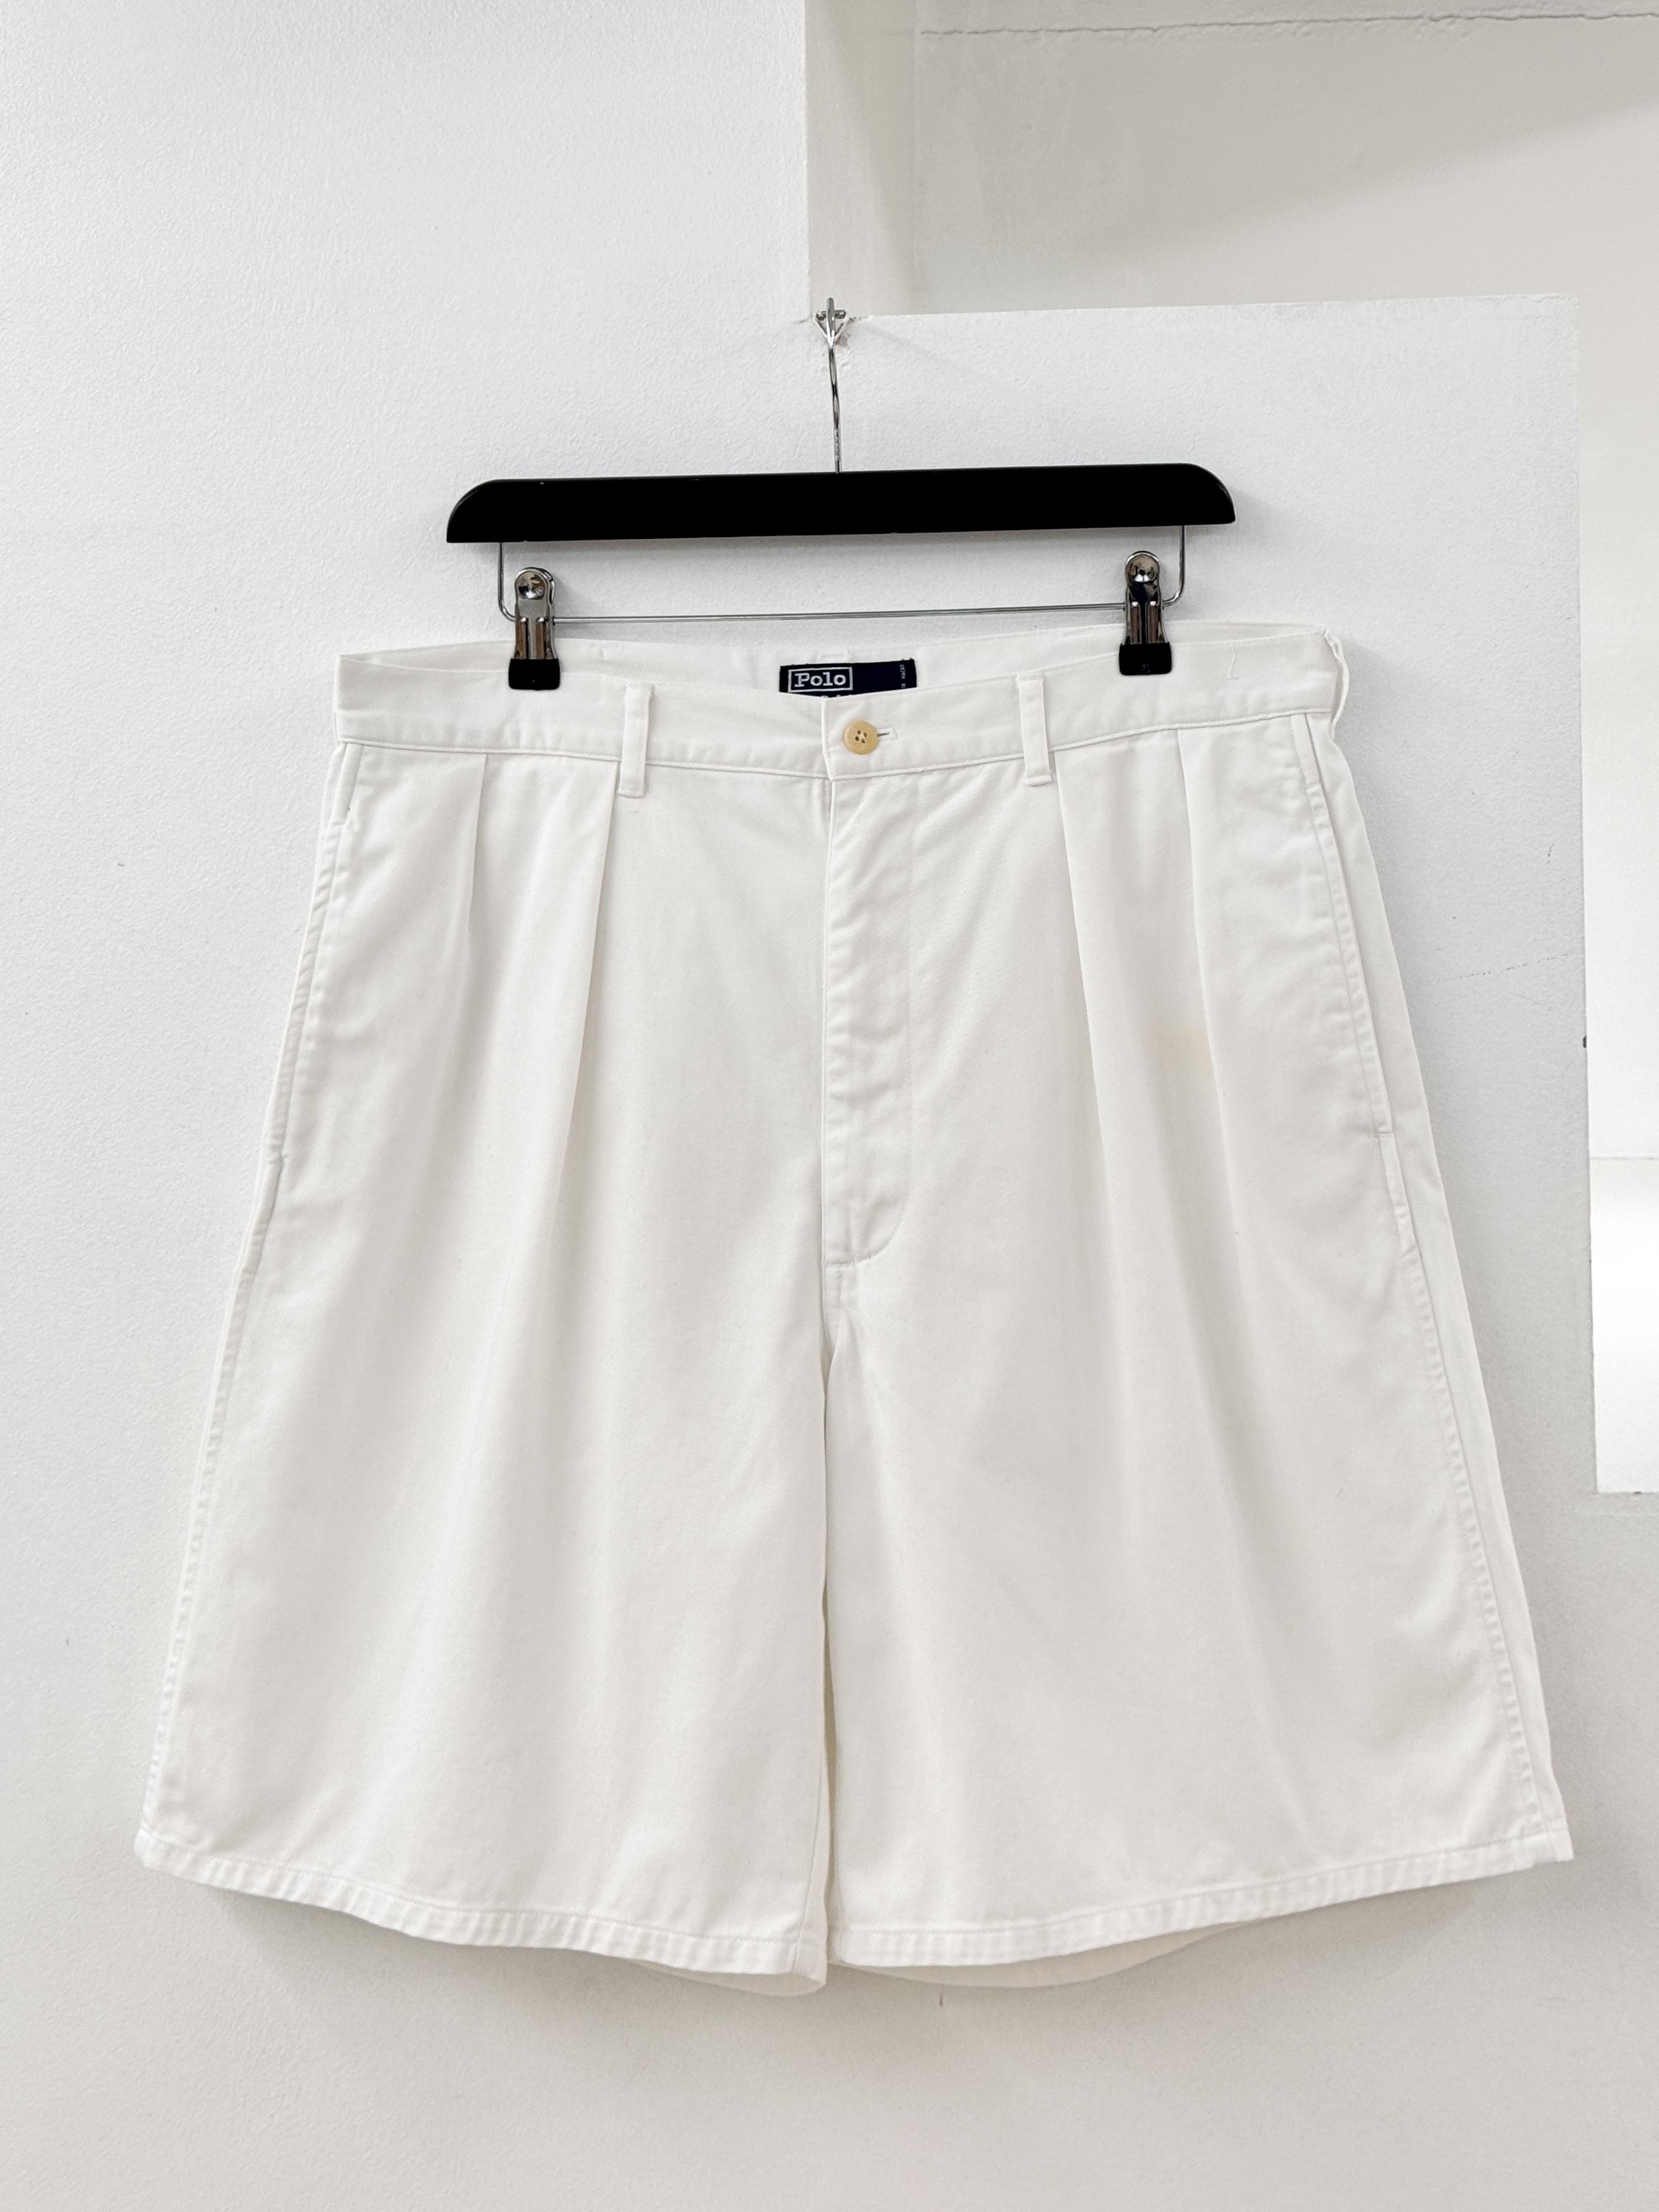 Polo RalphLauren white shorts 35size